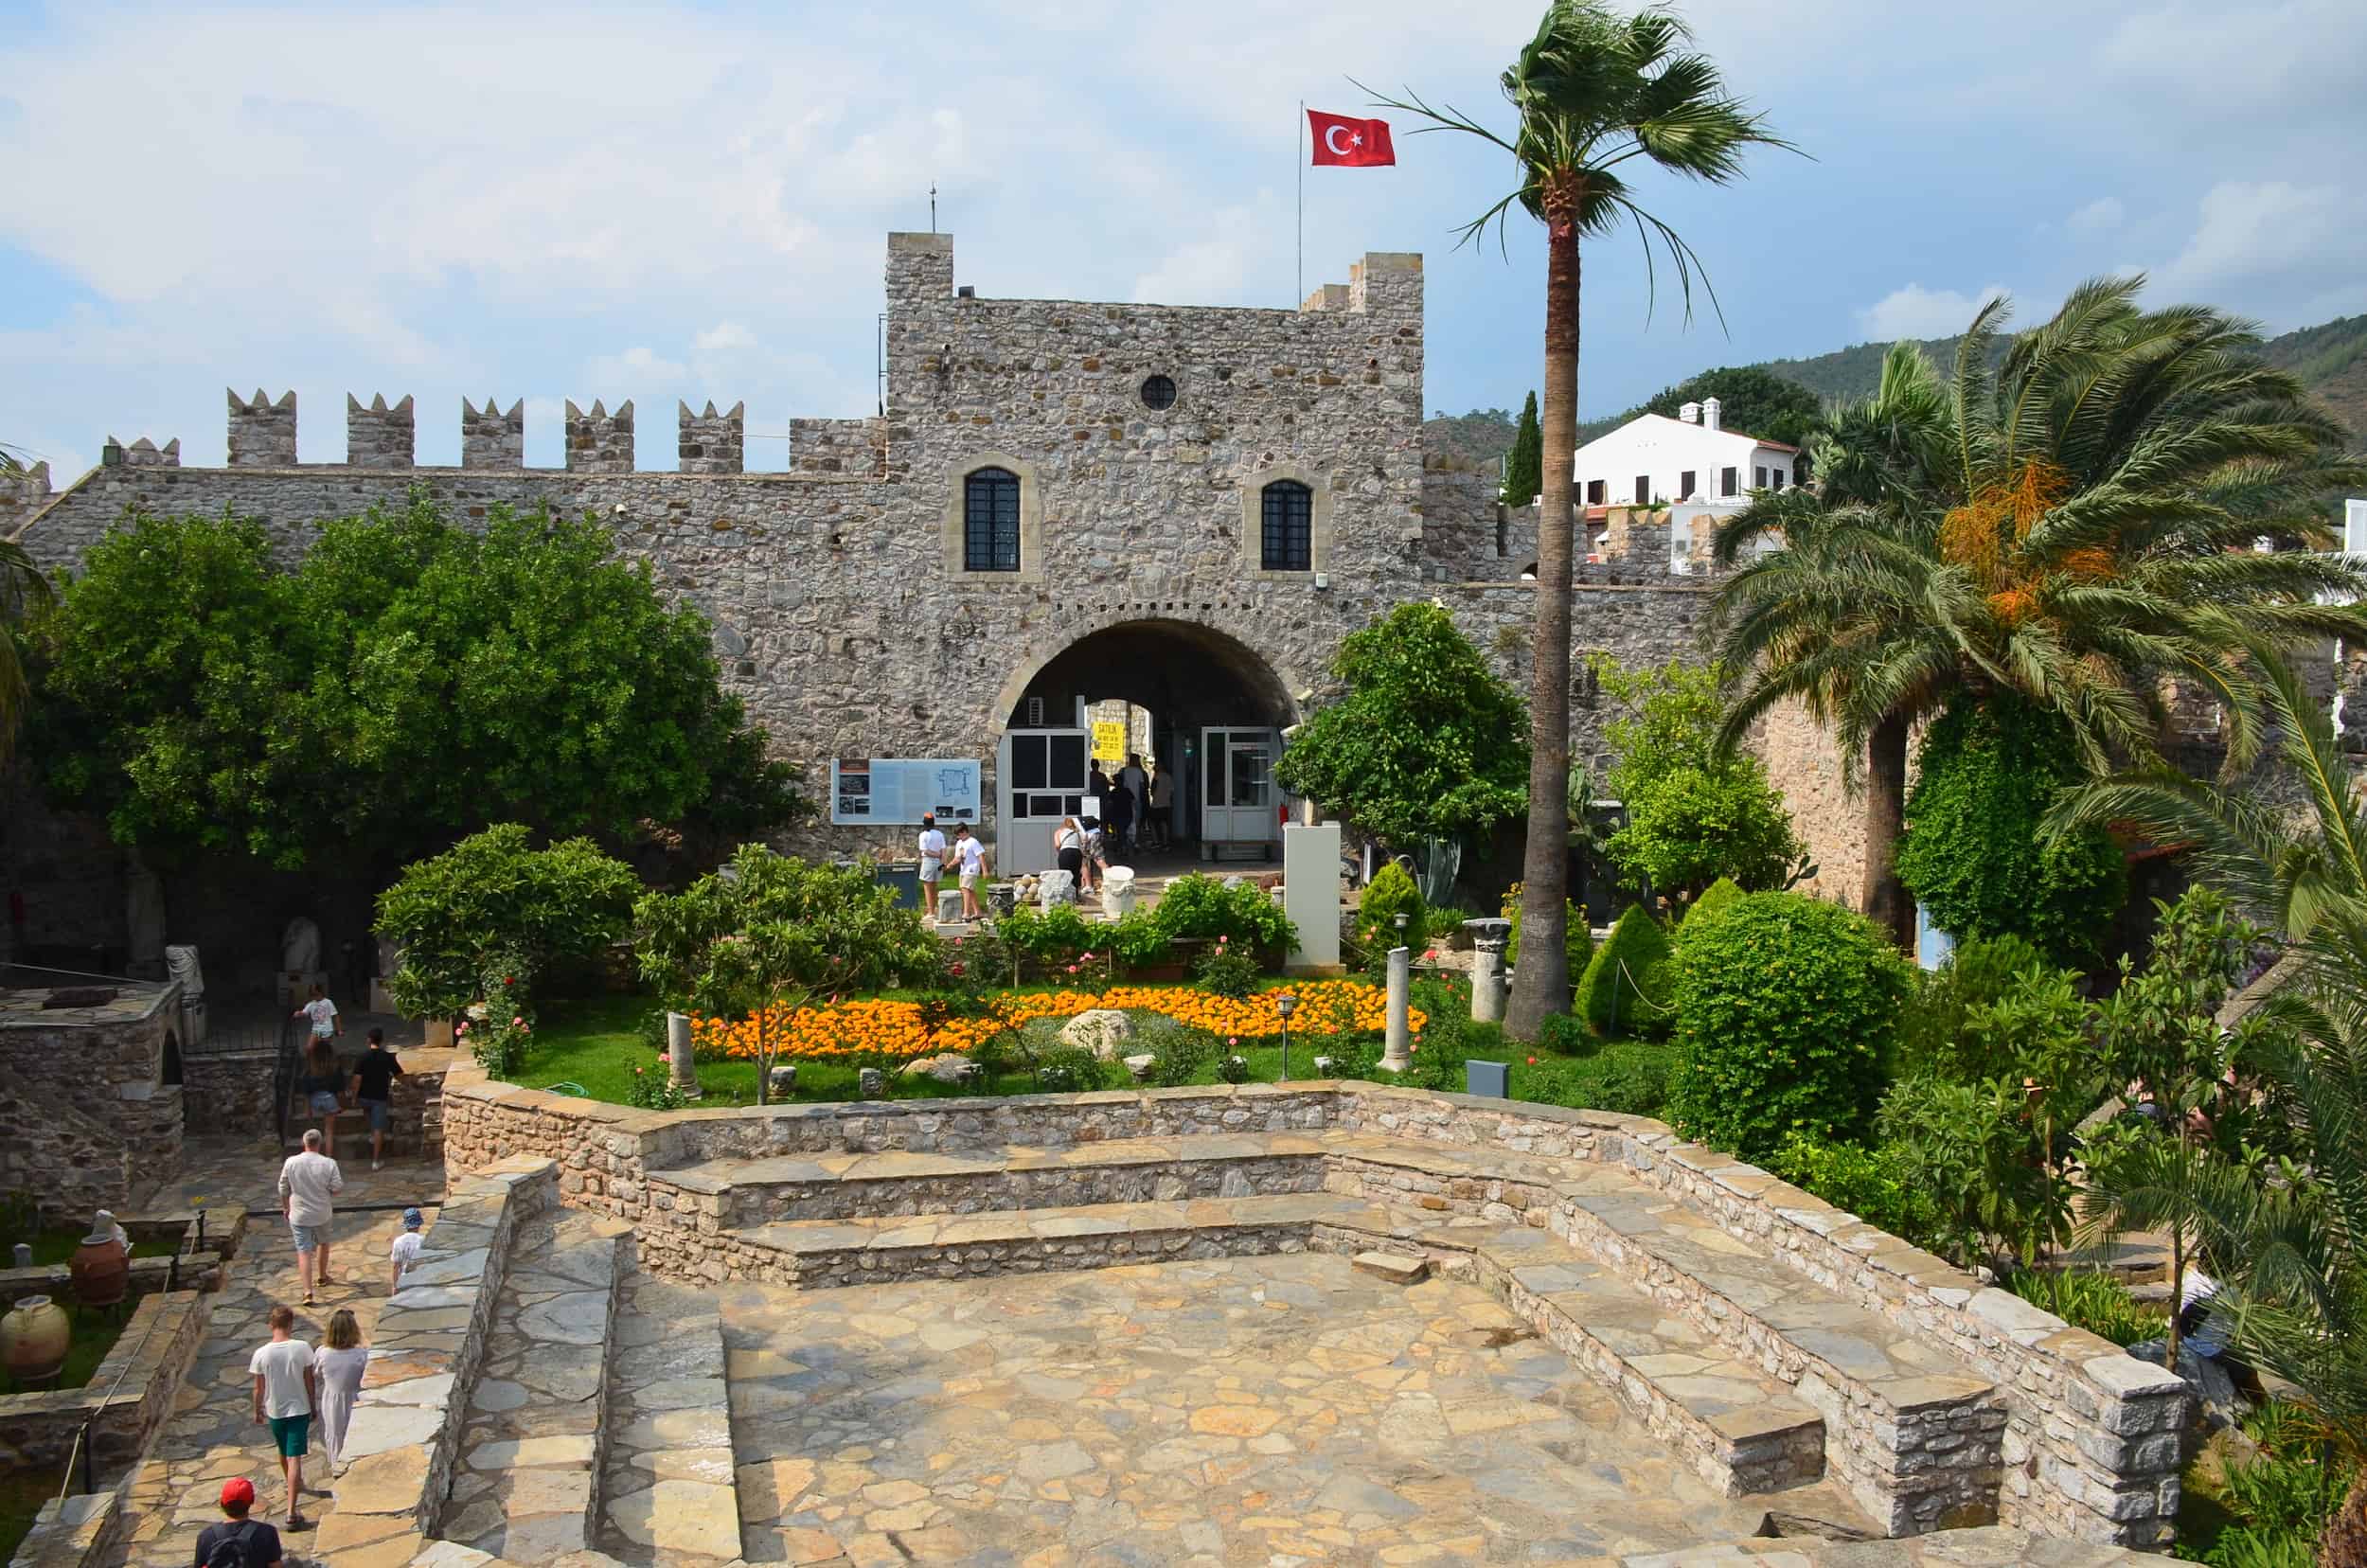 Courtyard of Marmaris Castle in Marmaris, Turkey